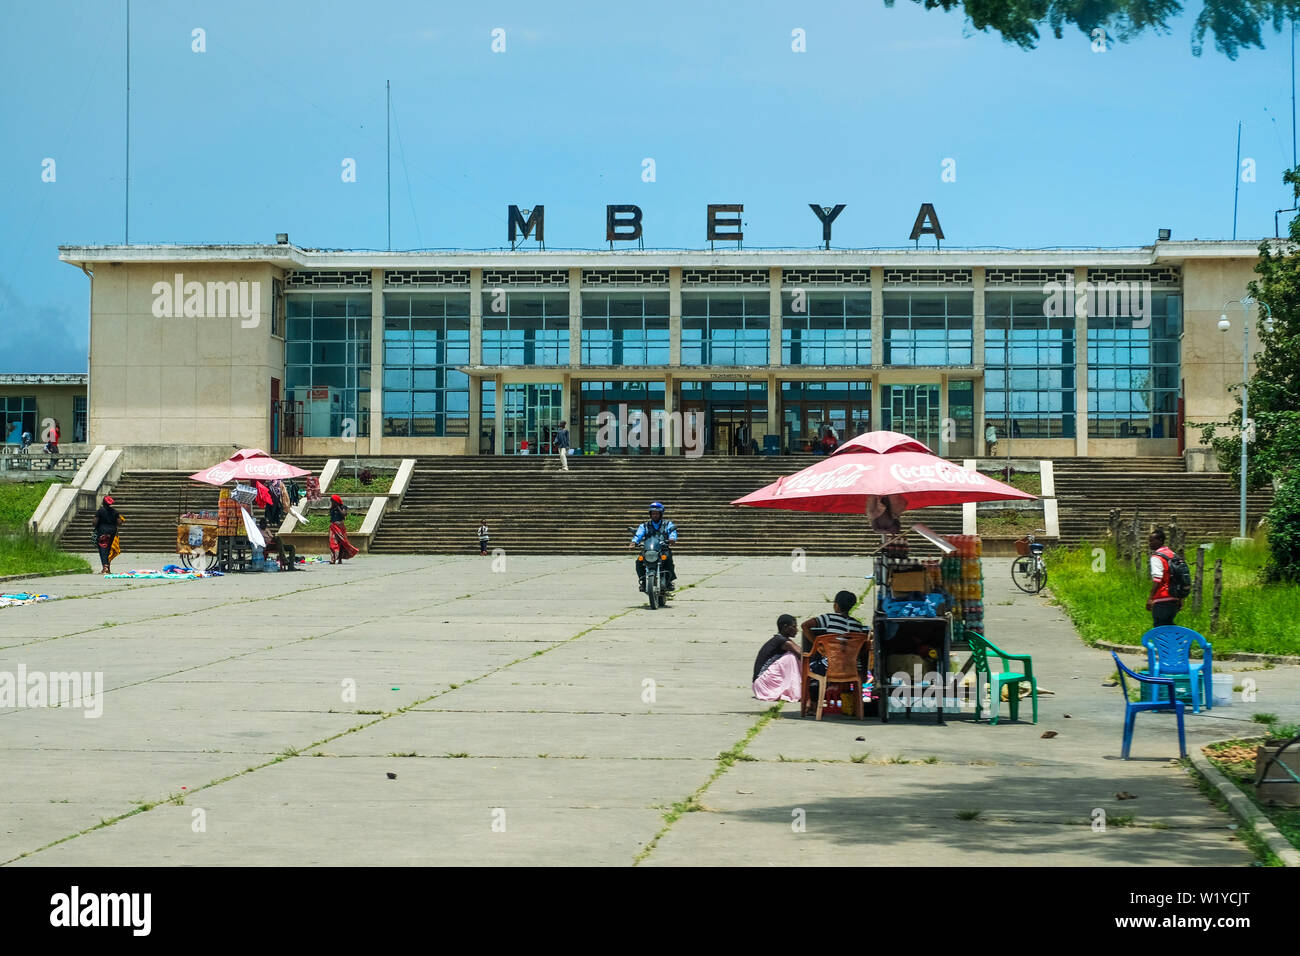 La stazione ferroviaria della città di Mbeya, Tanzania Africa --- Bahnhof von Mbeya, Tanzania. Foto Stock